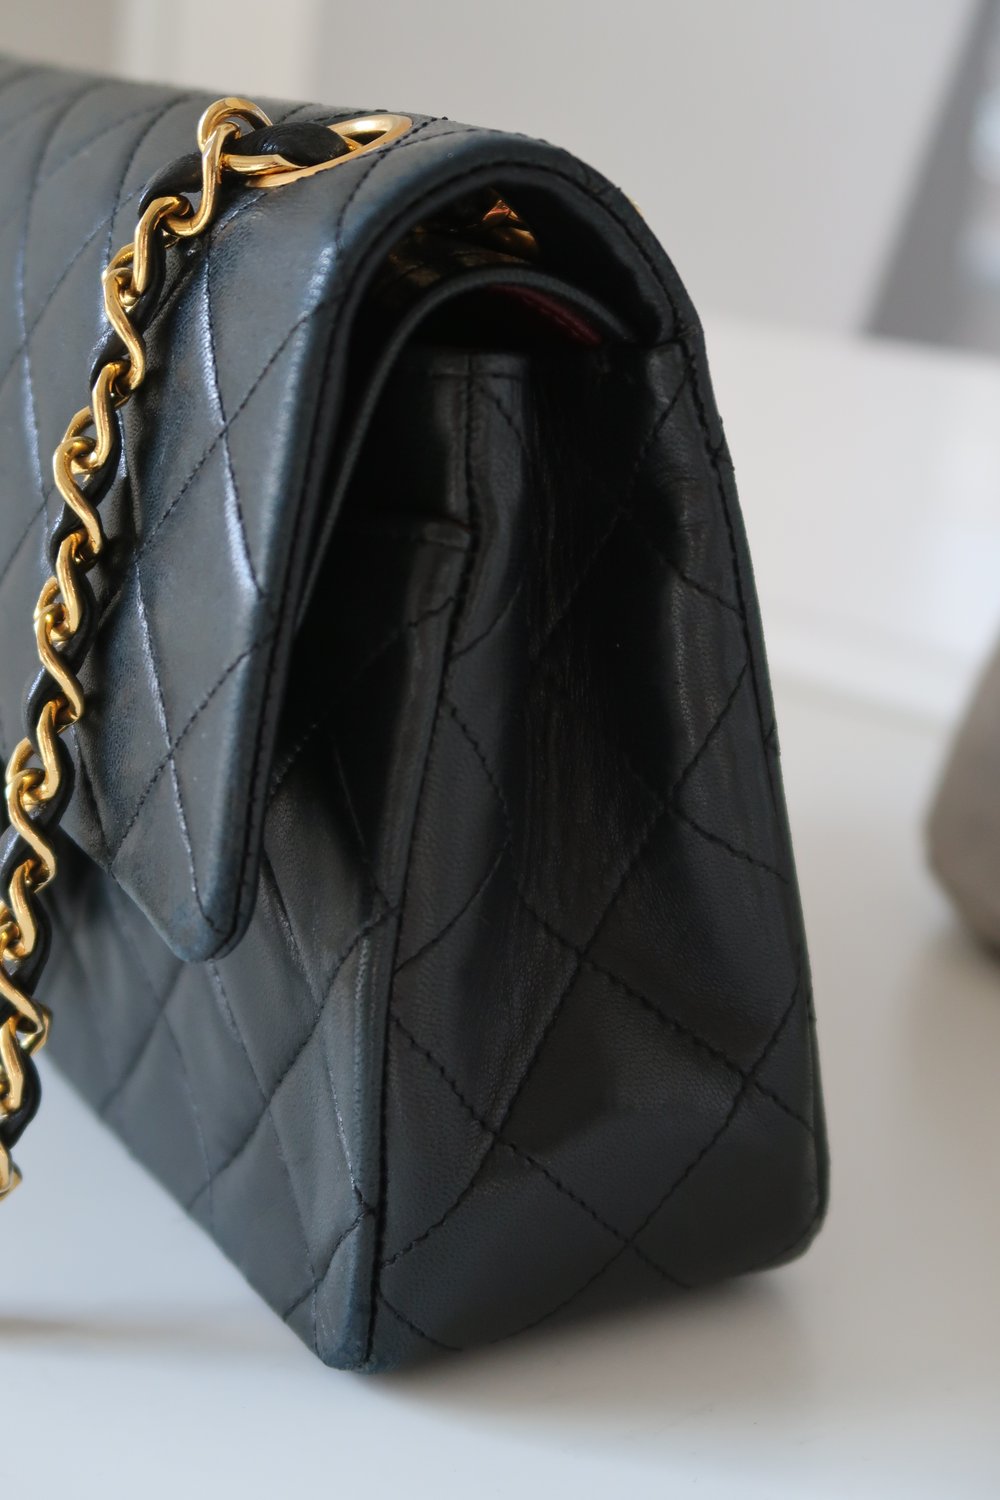 Inside a Medium Classic Chanel Double Flap Bag - Lollipuff